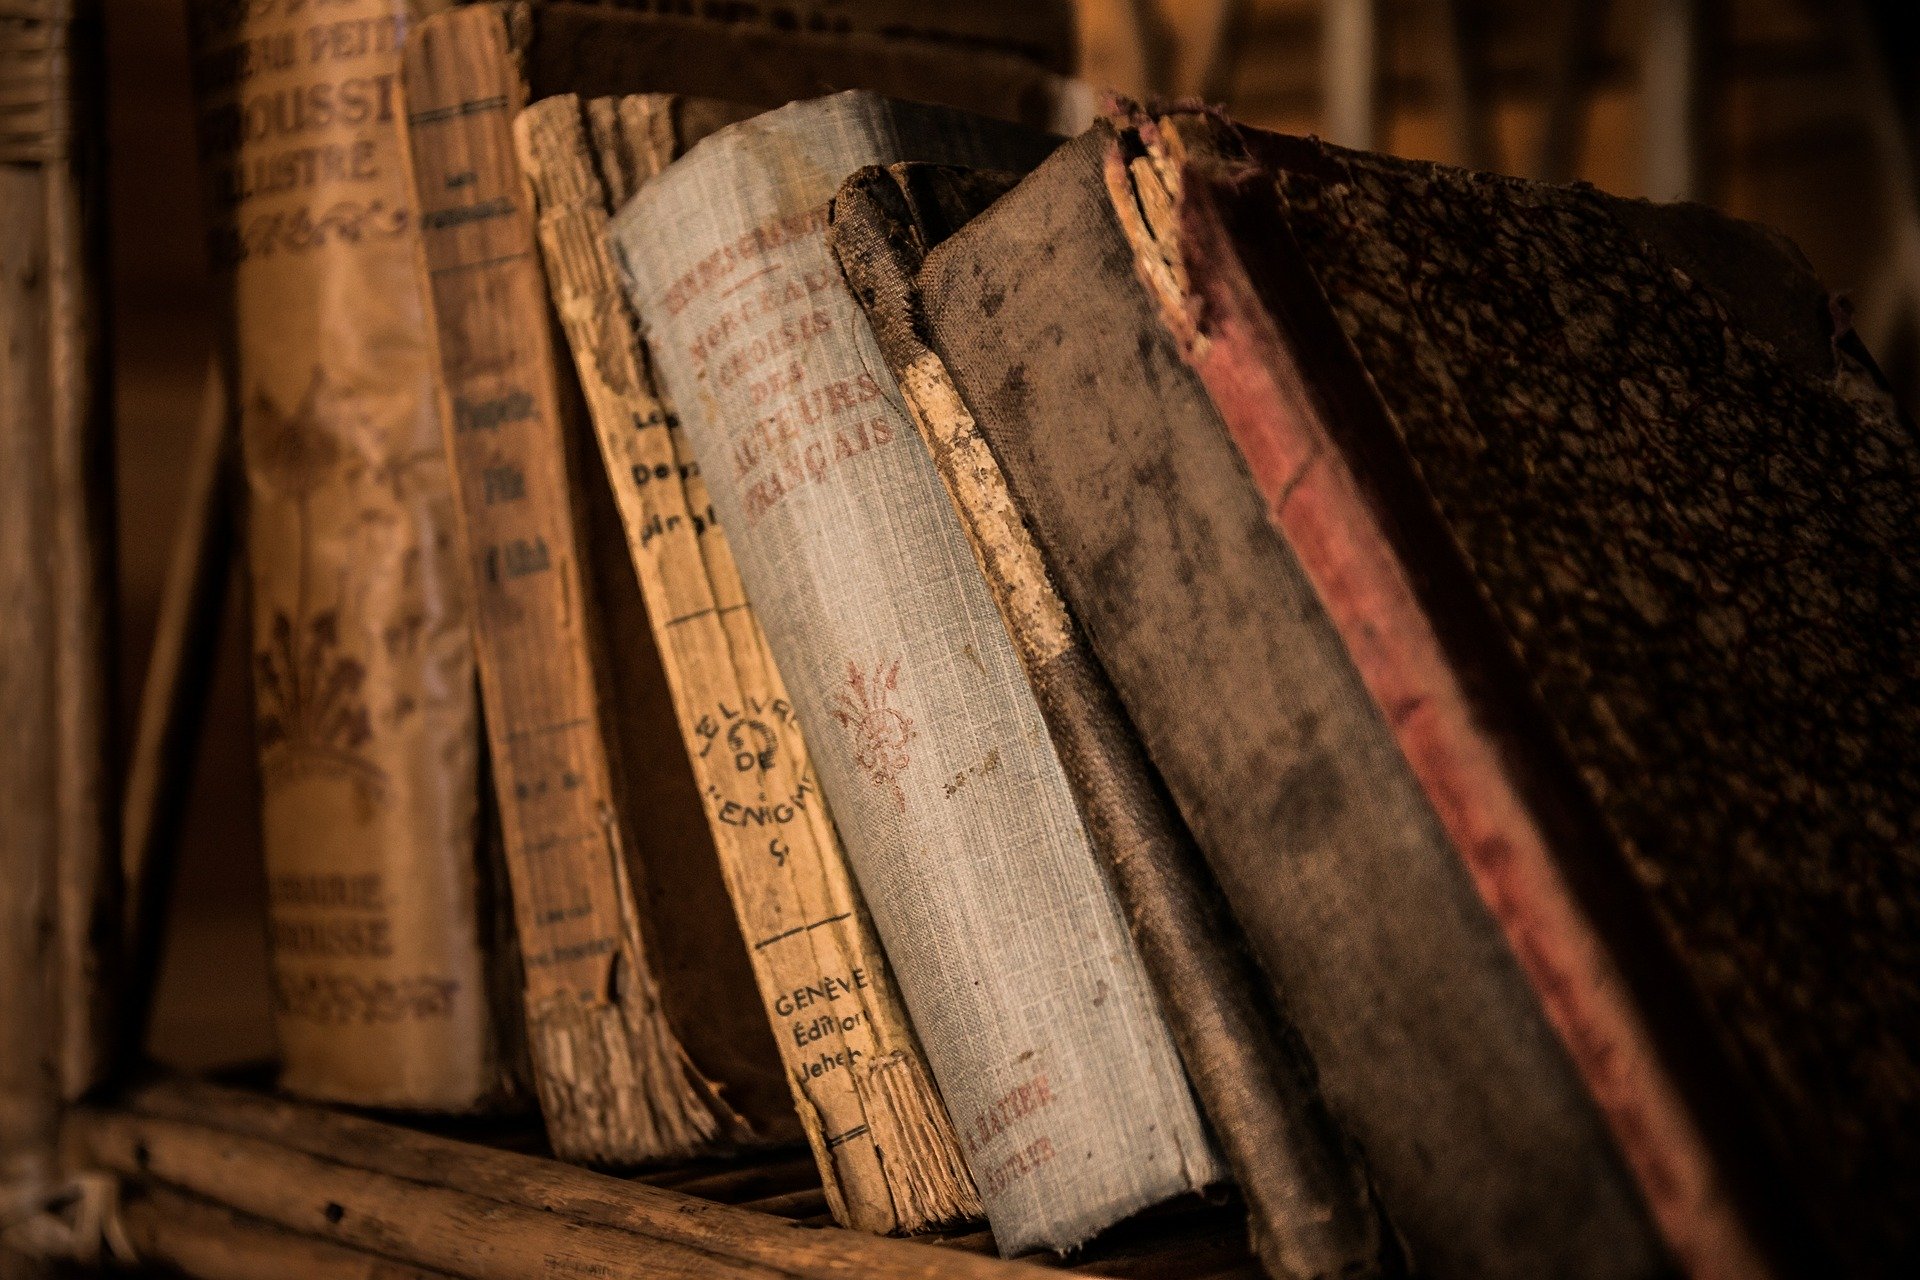 A shelf of old books